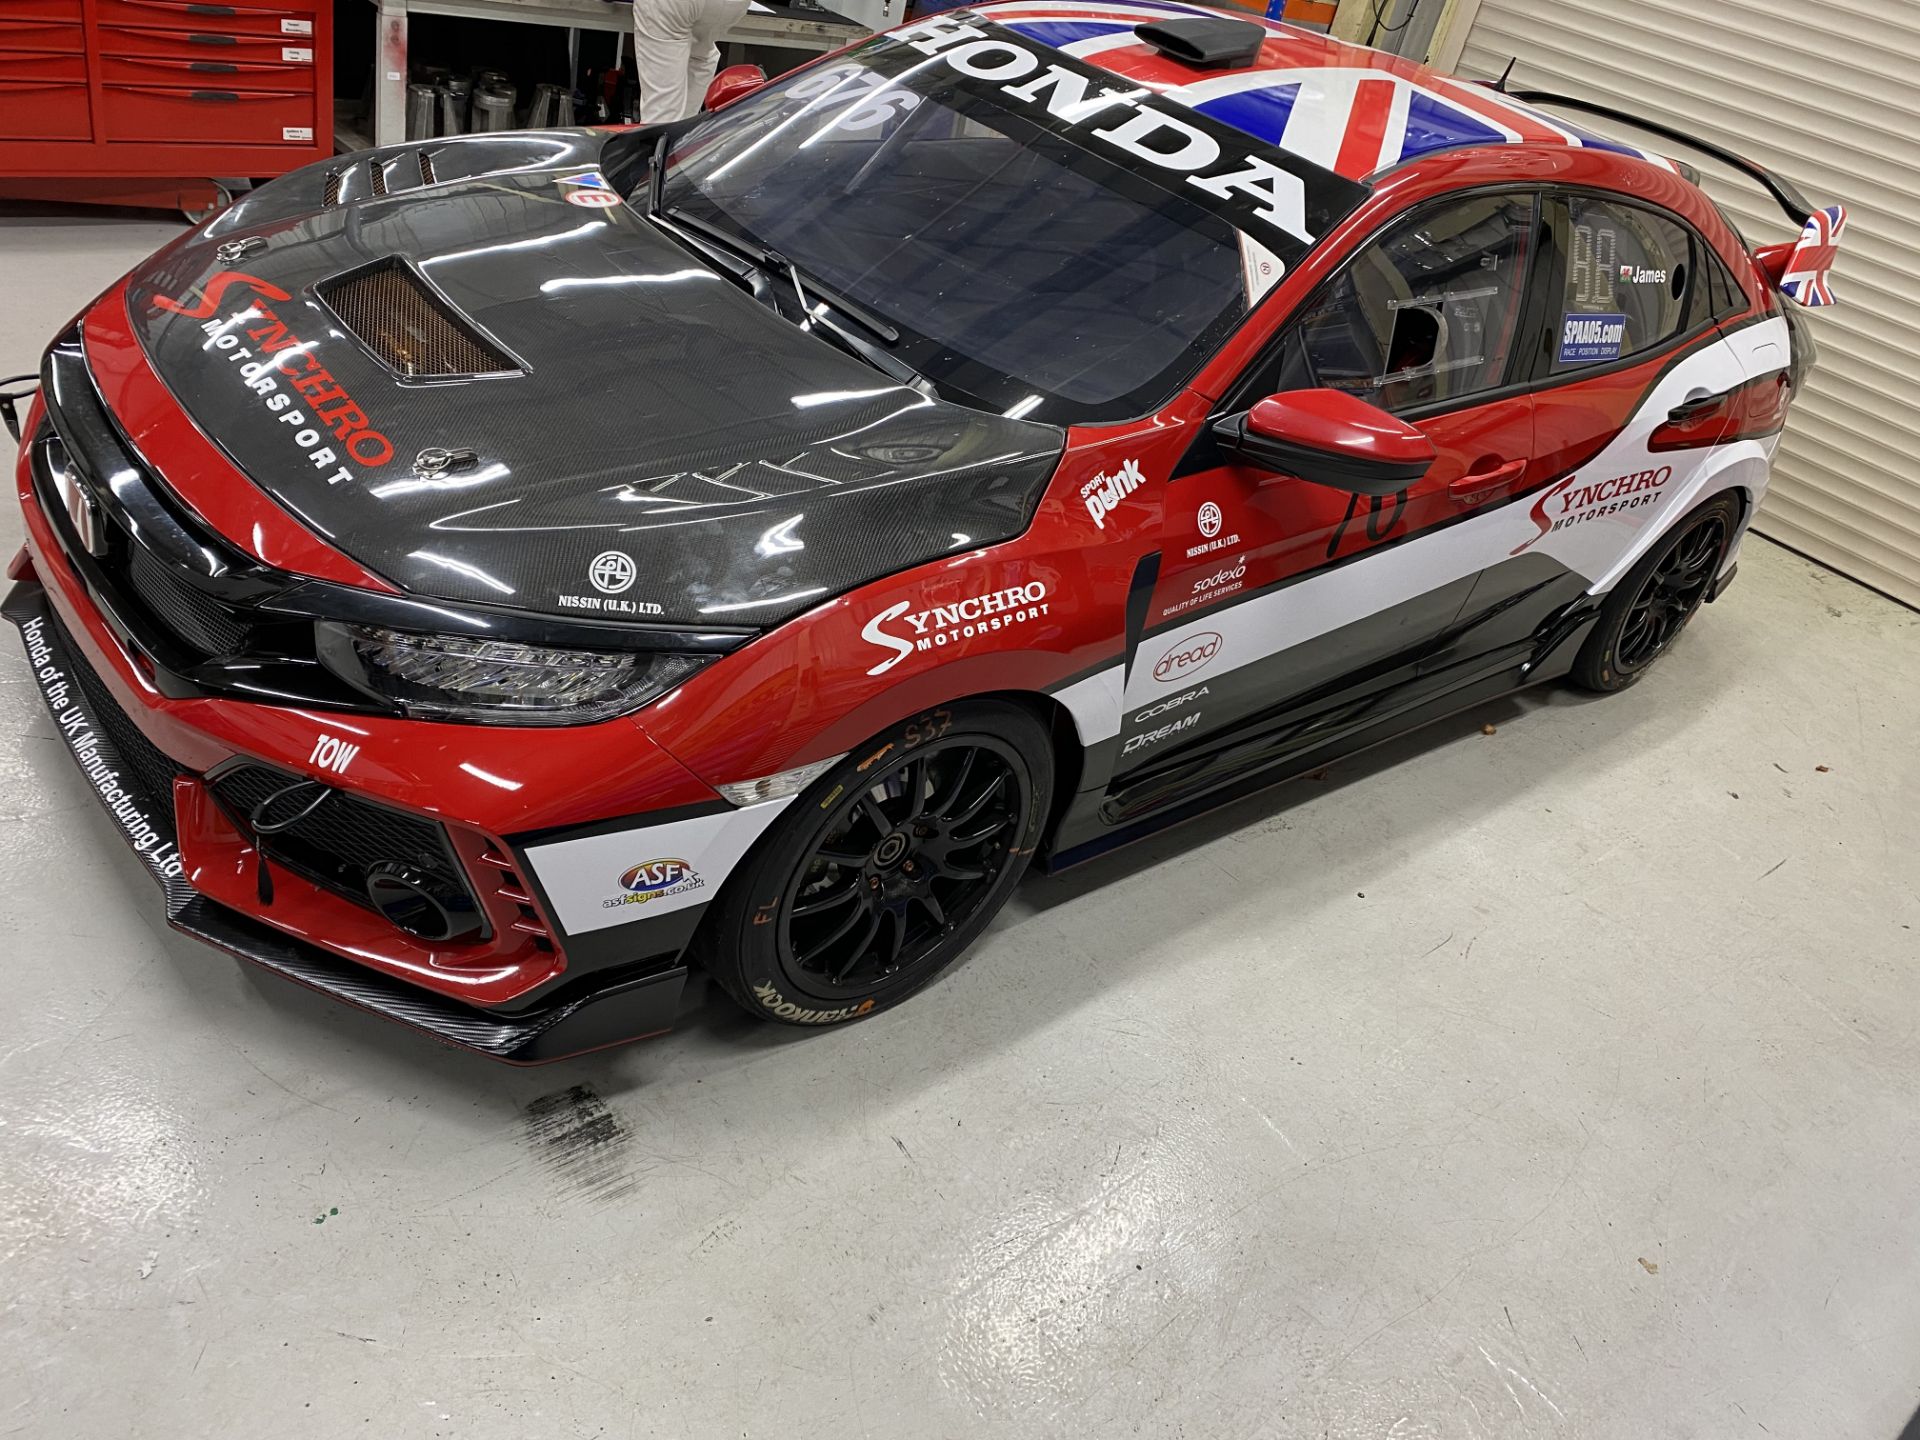 Honda Civic Endurance 20L FK8 type R left hand drive racing car, red and black paint finish, 2018 - Bild 3 aus 93